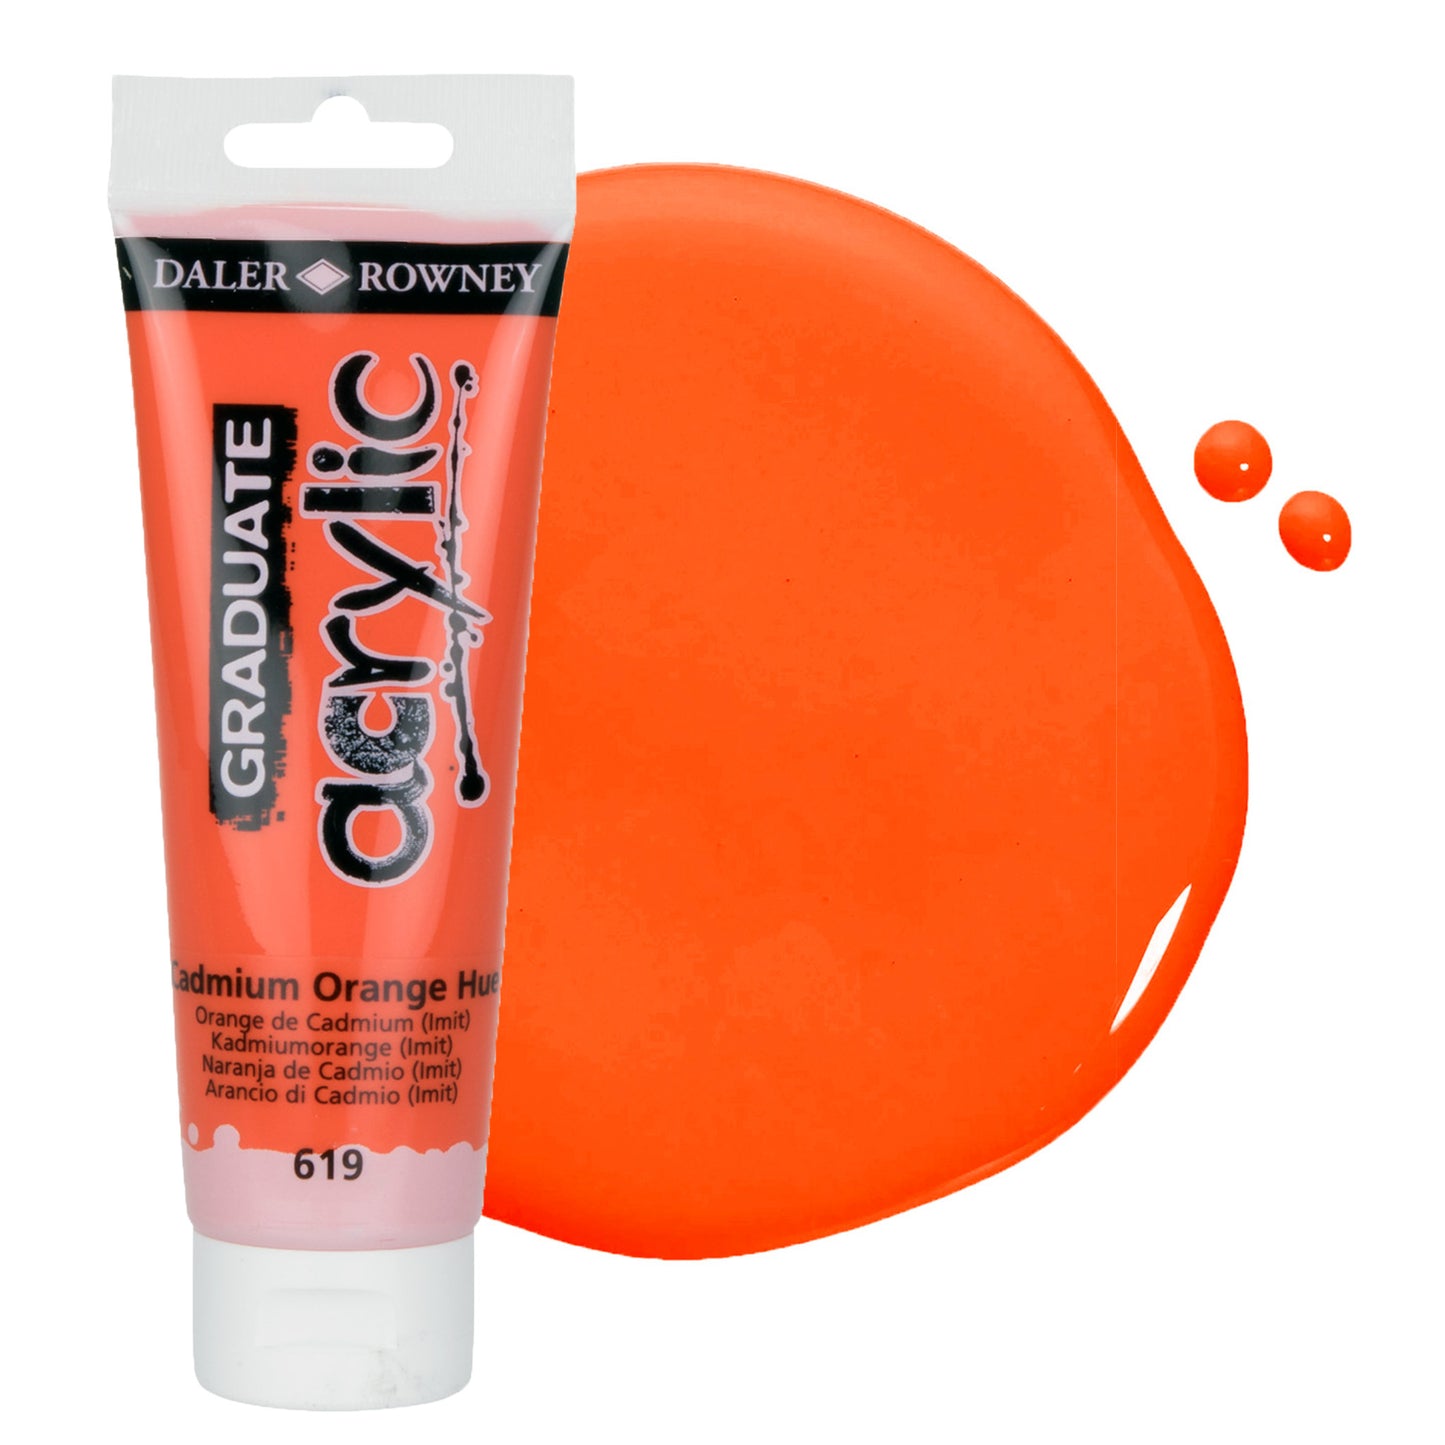 Daler & Rowney beginner's deep orange acrylic paint tube